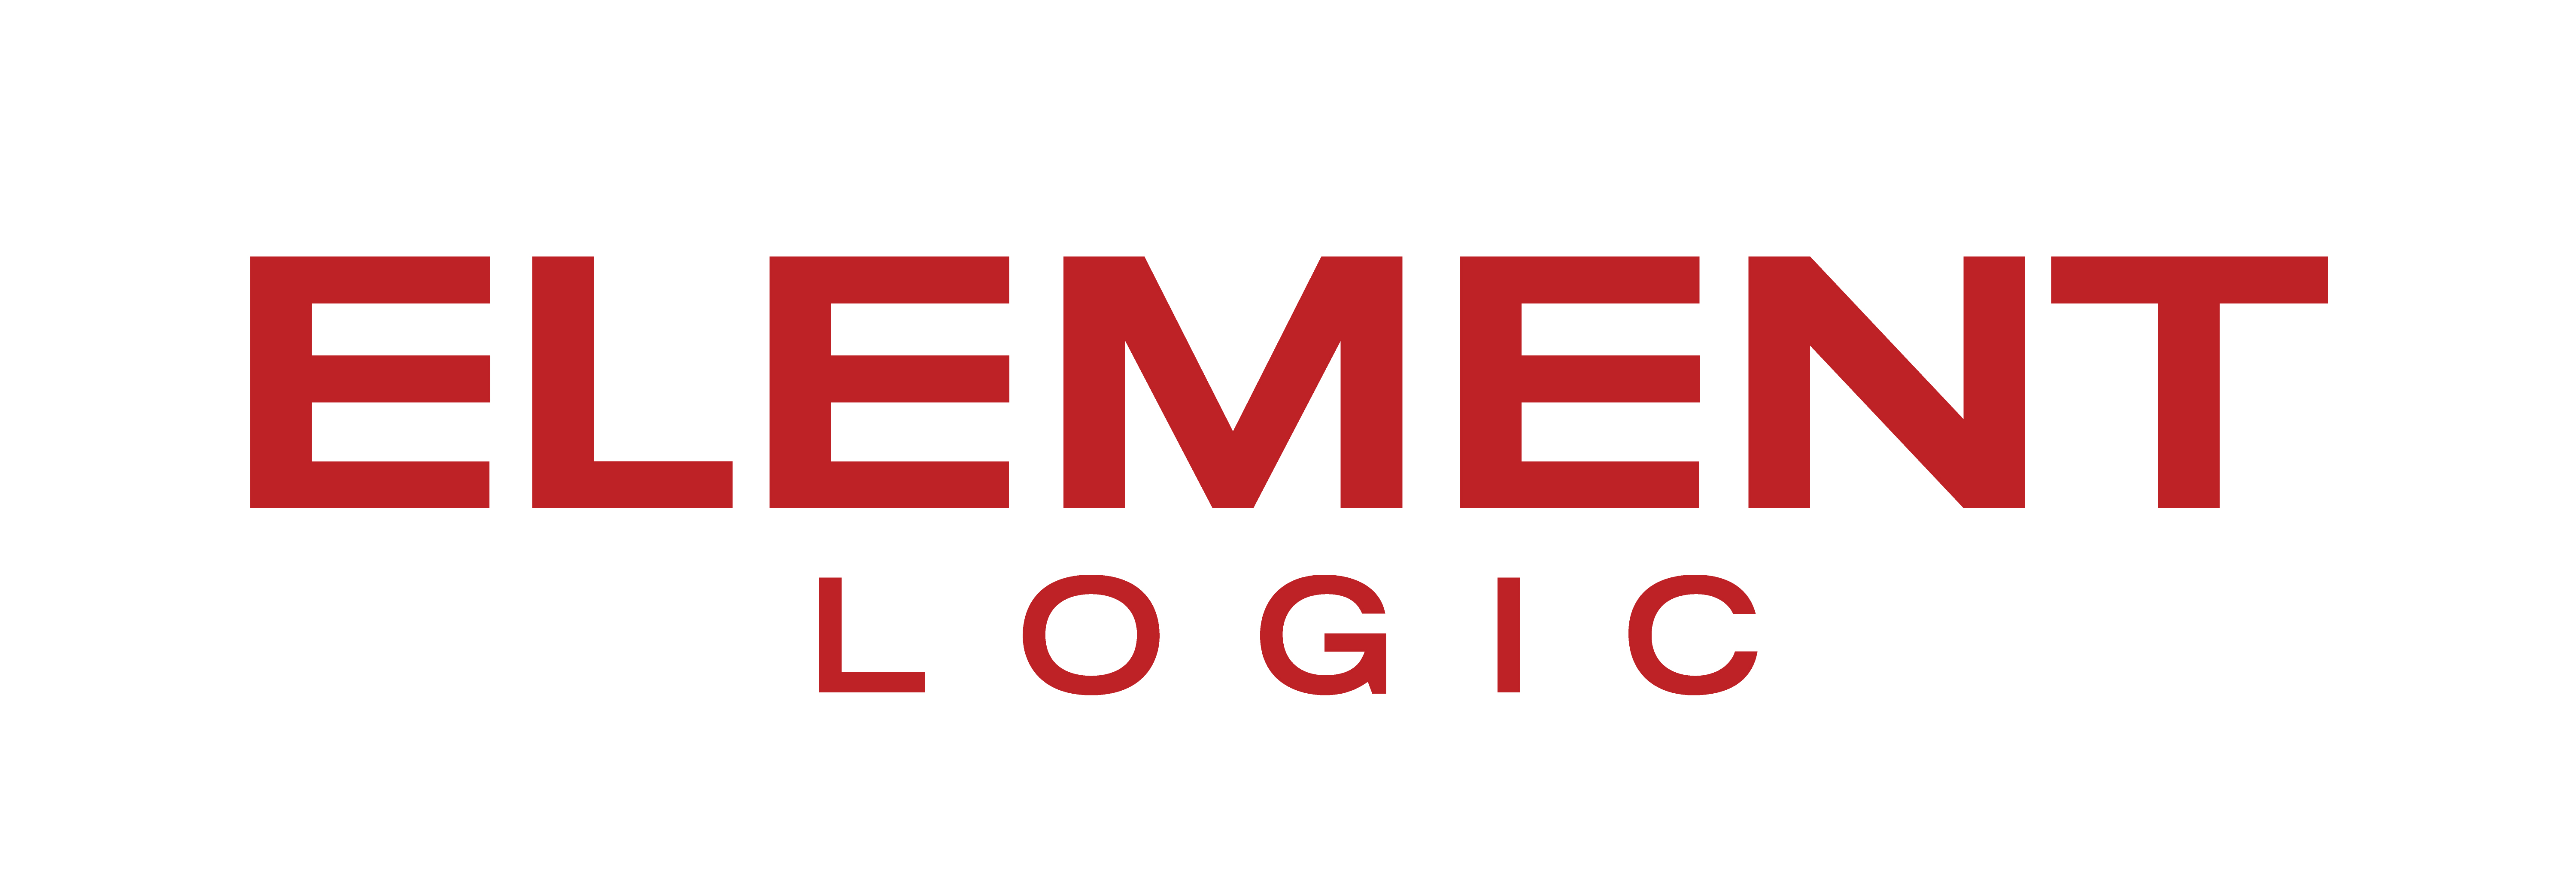 Element Logic-logo